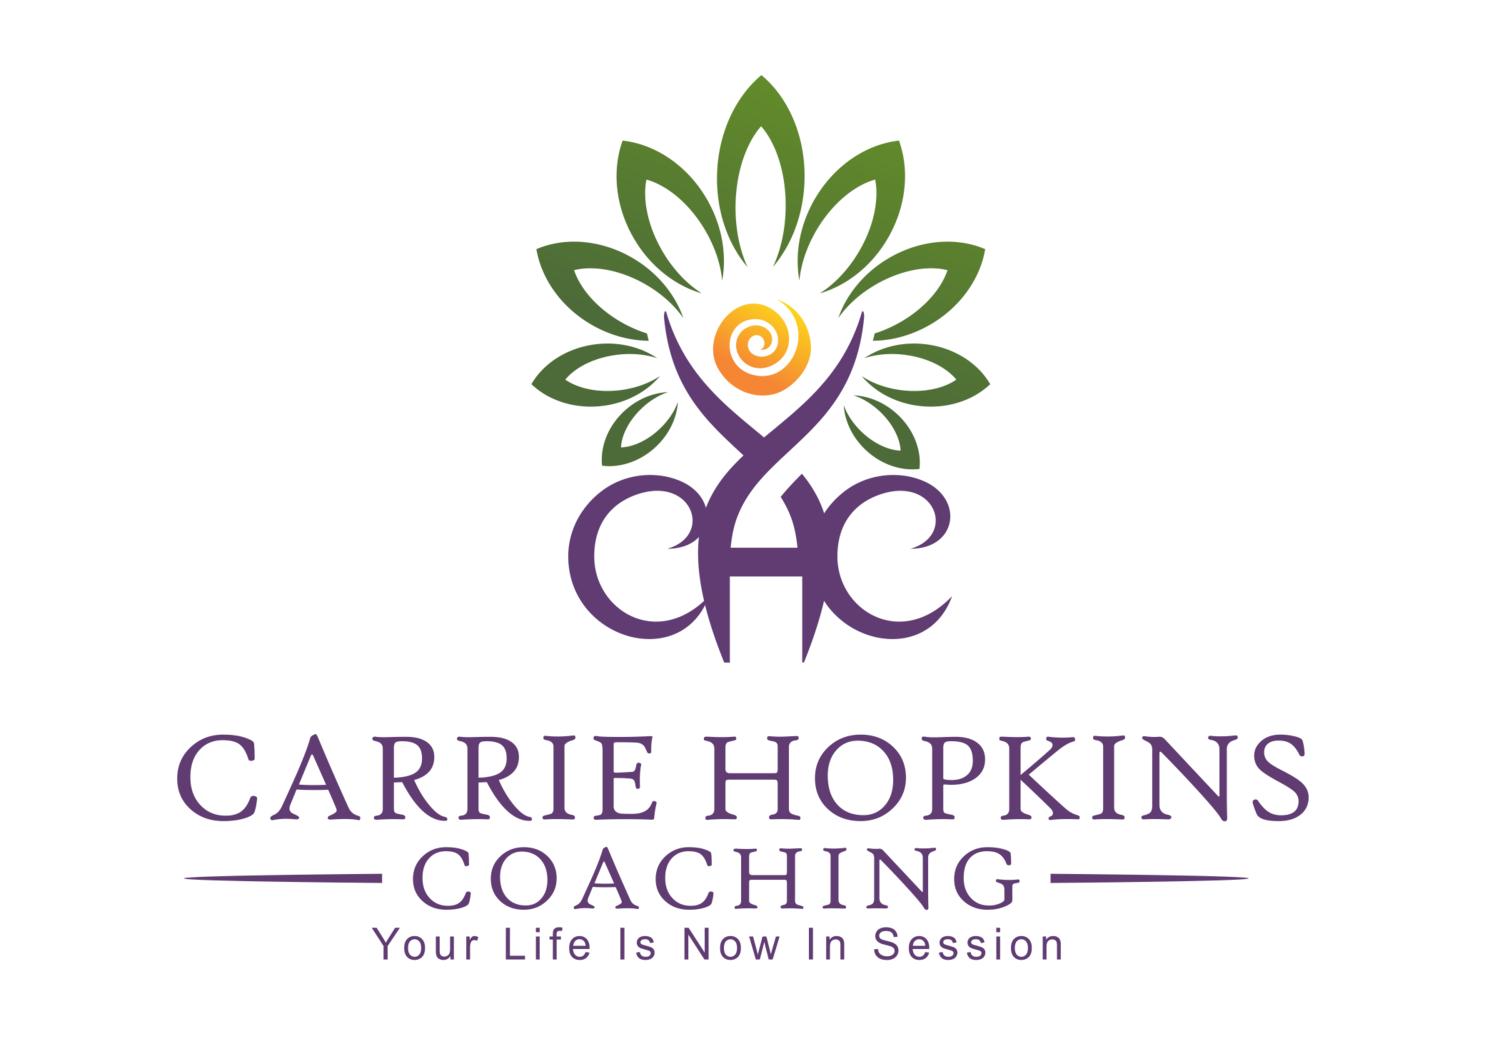 Carrie Hopkins Coaching